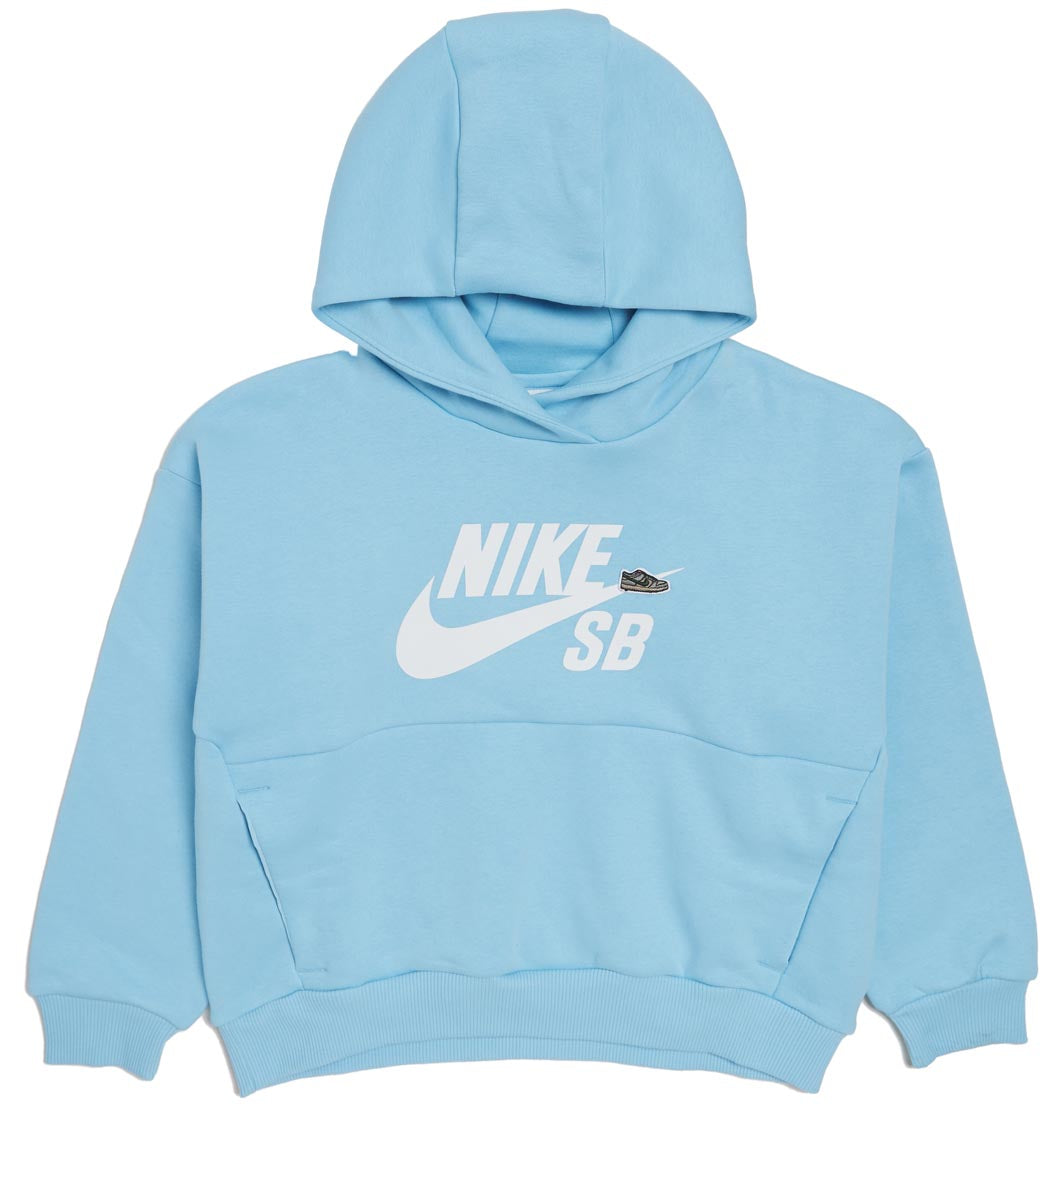 Nike SB Youth Icon Fleece EasyOn Hoodie - Aquarius Blue/White image 1